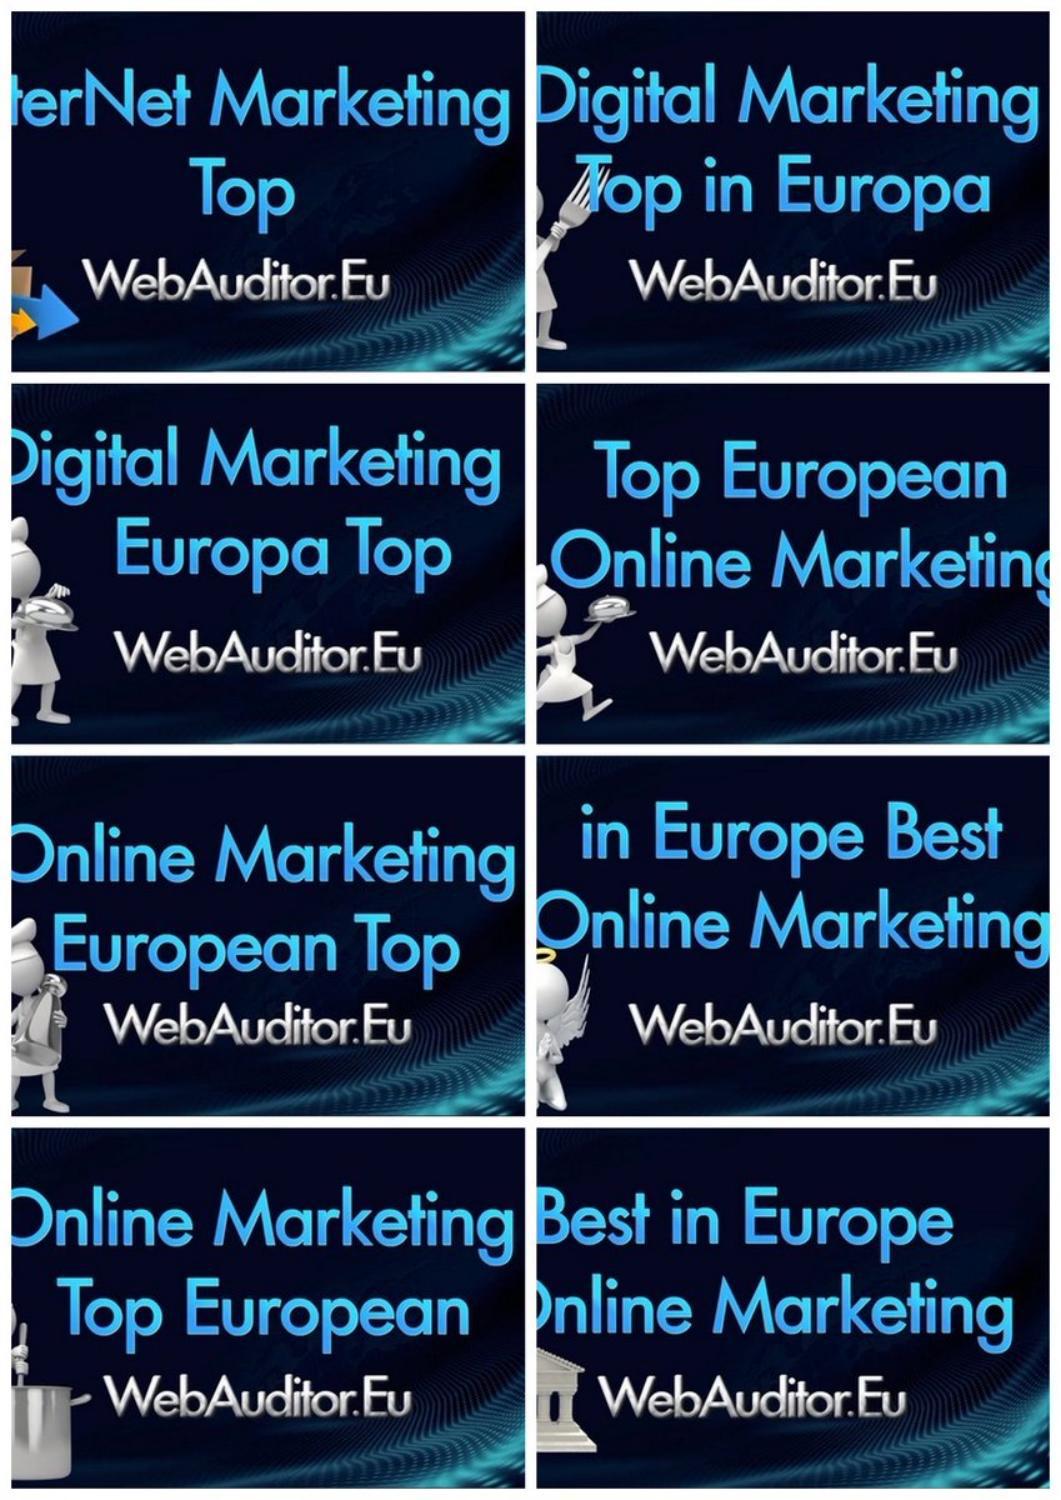 Best European Online Marketing #WebAuditor.Eu for Shops Advertising Top European SEO Consulting #SEM